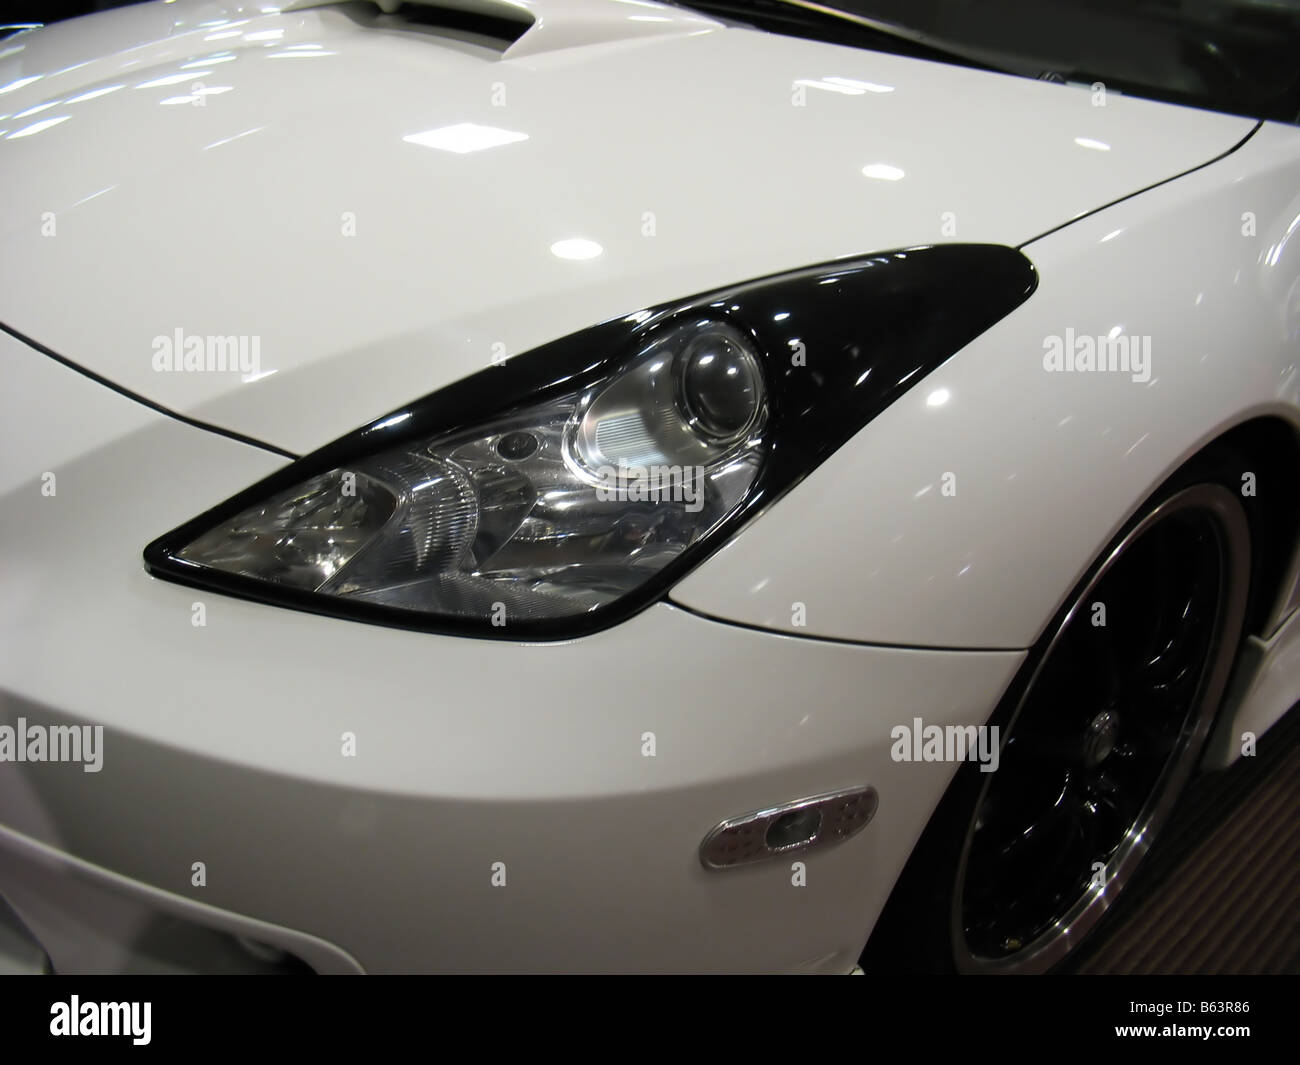 a detail shot of a sports car headlight Stock Photo